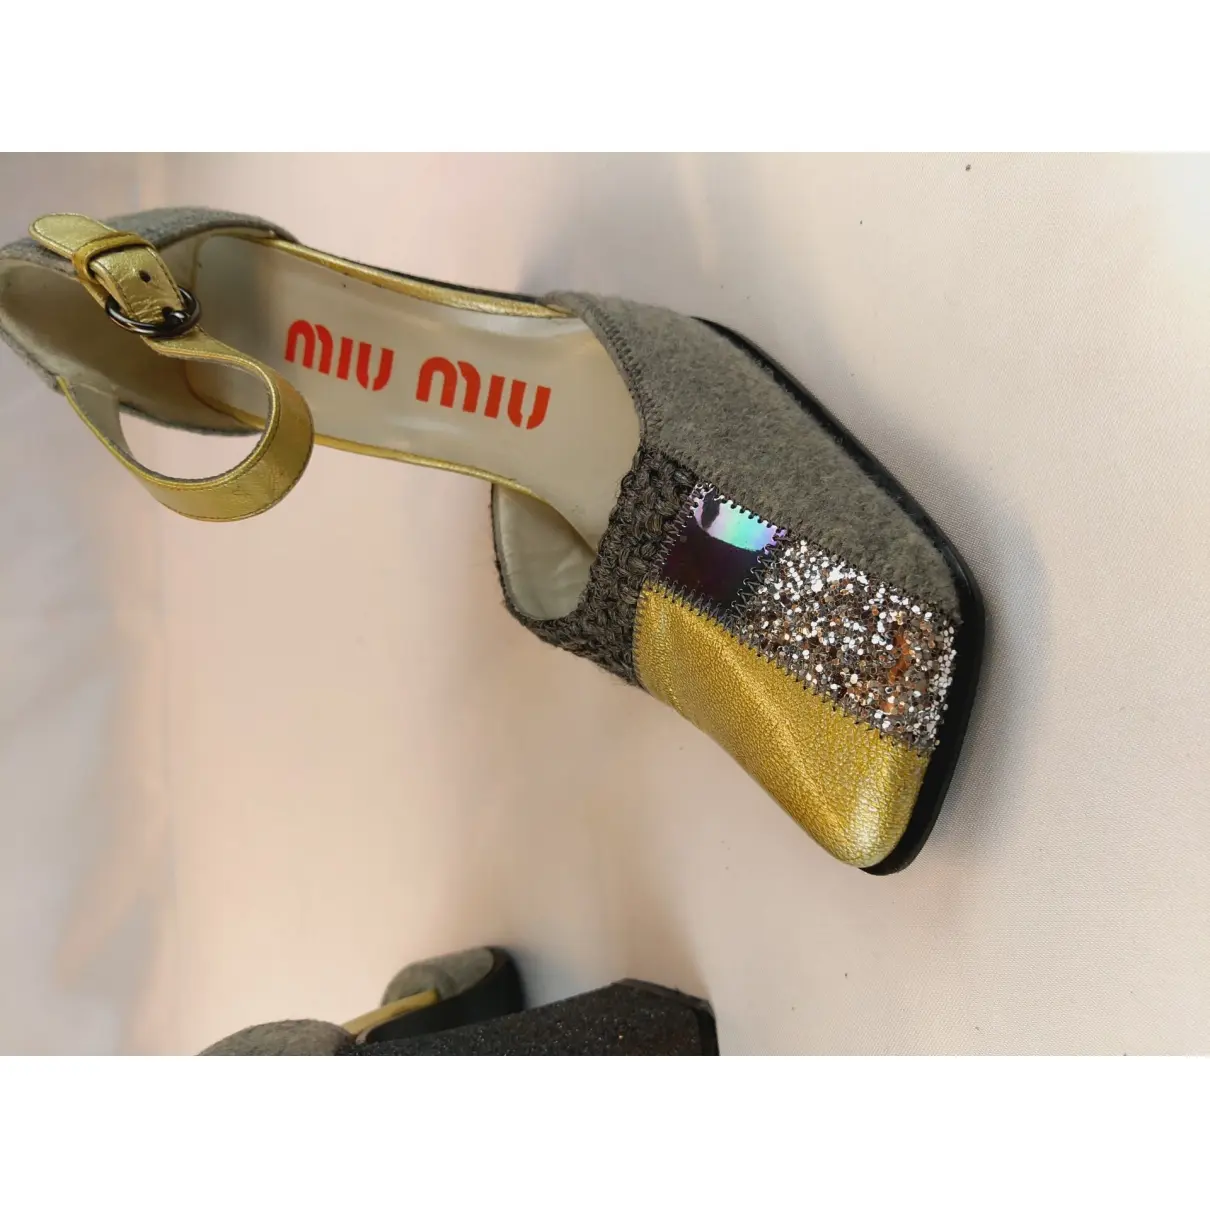 Miu Miu Leather heels for sale - Vintage